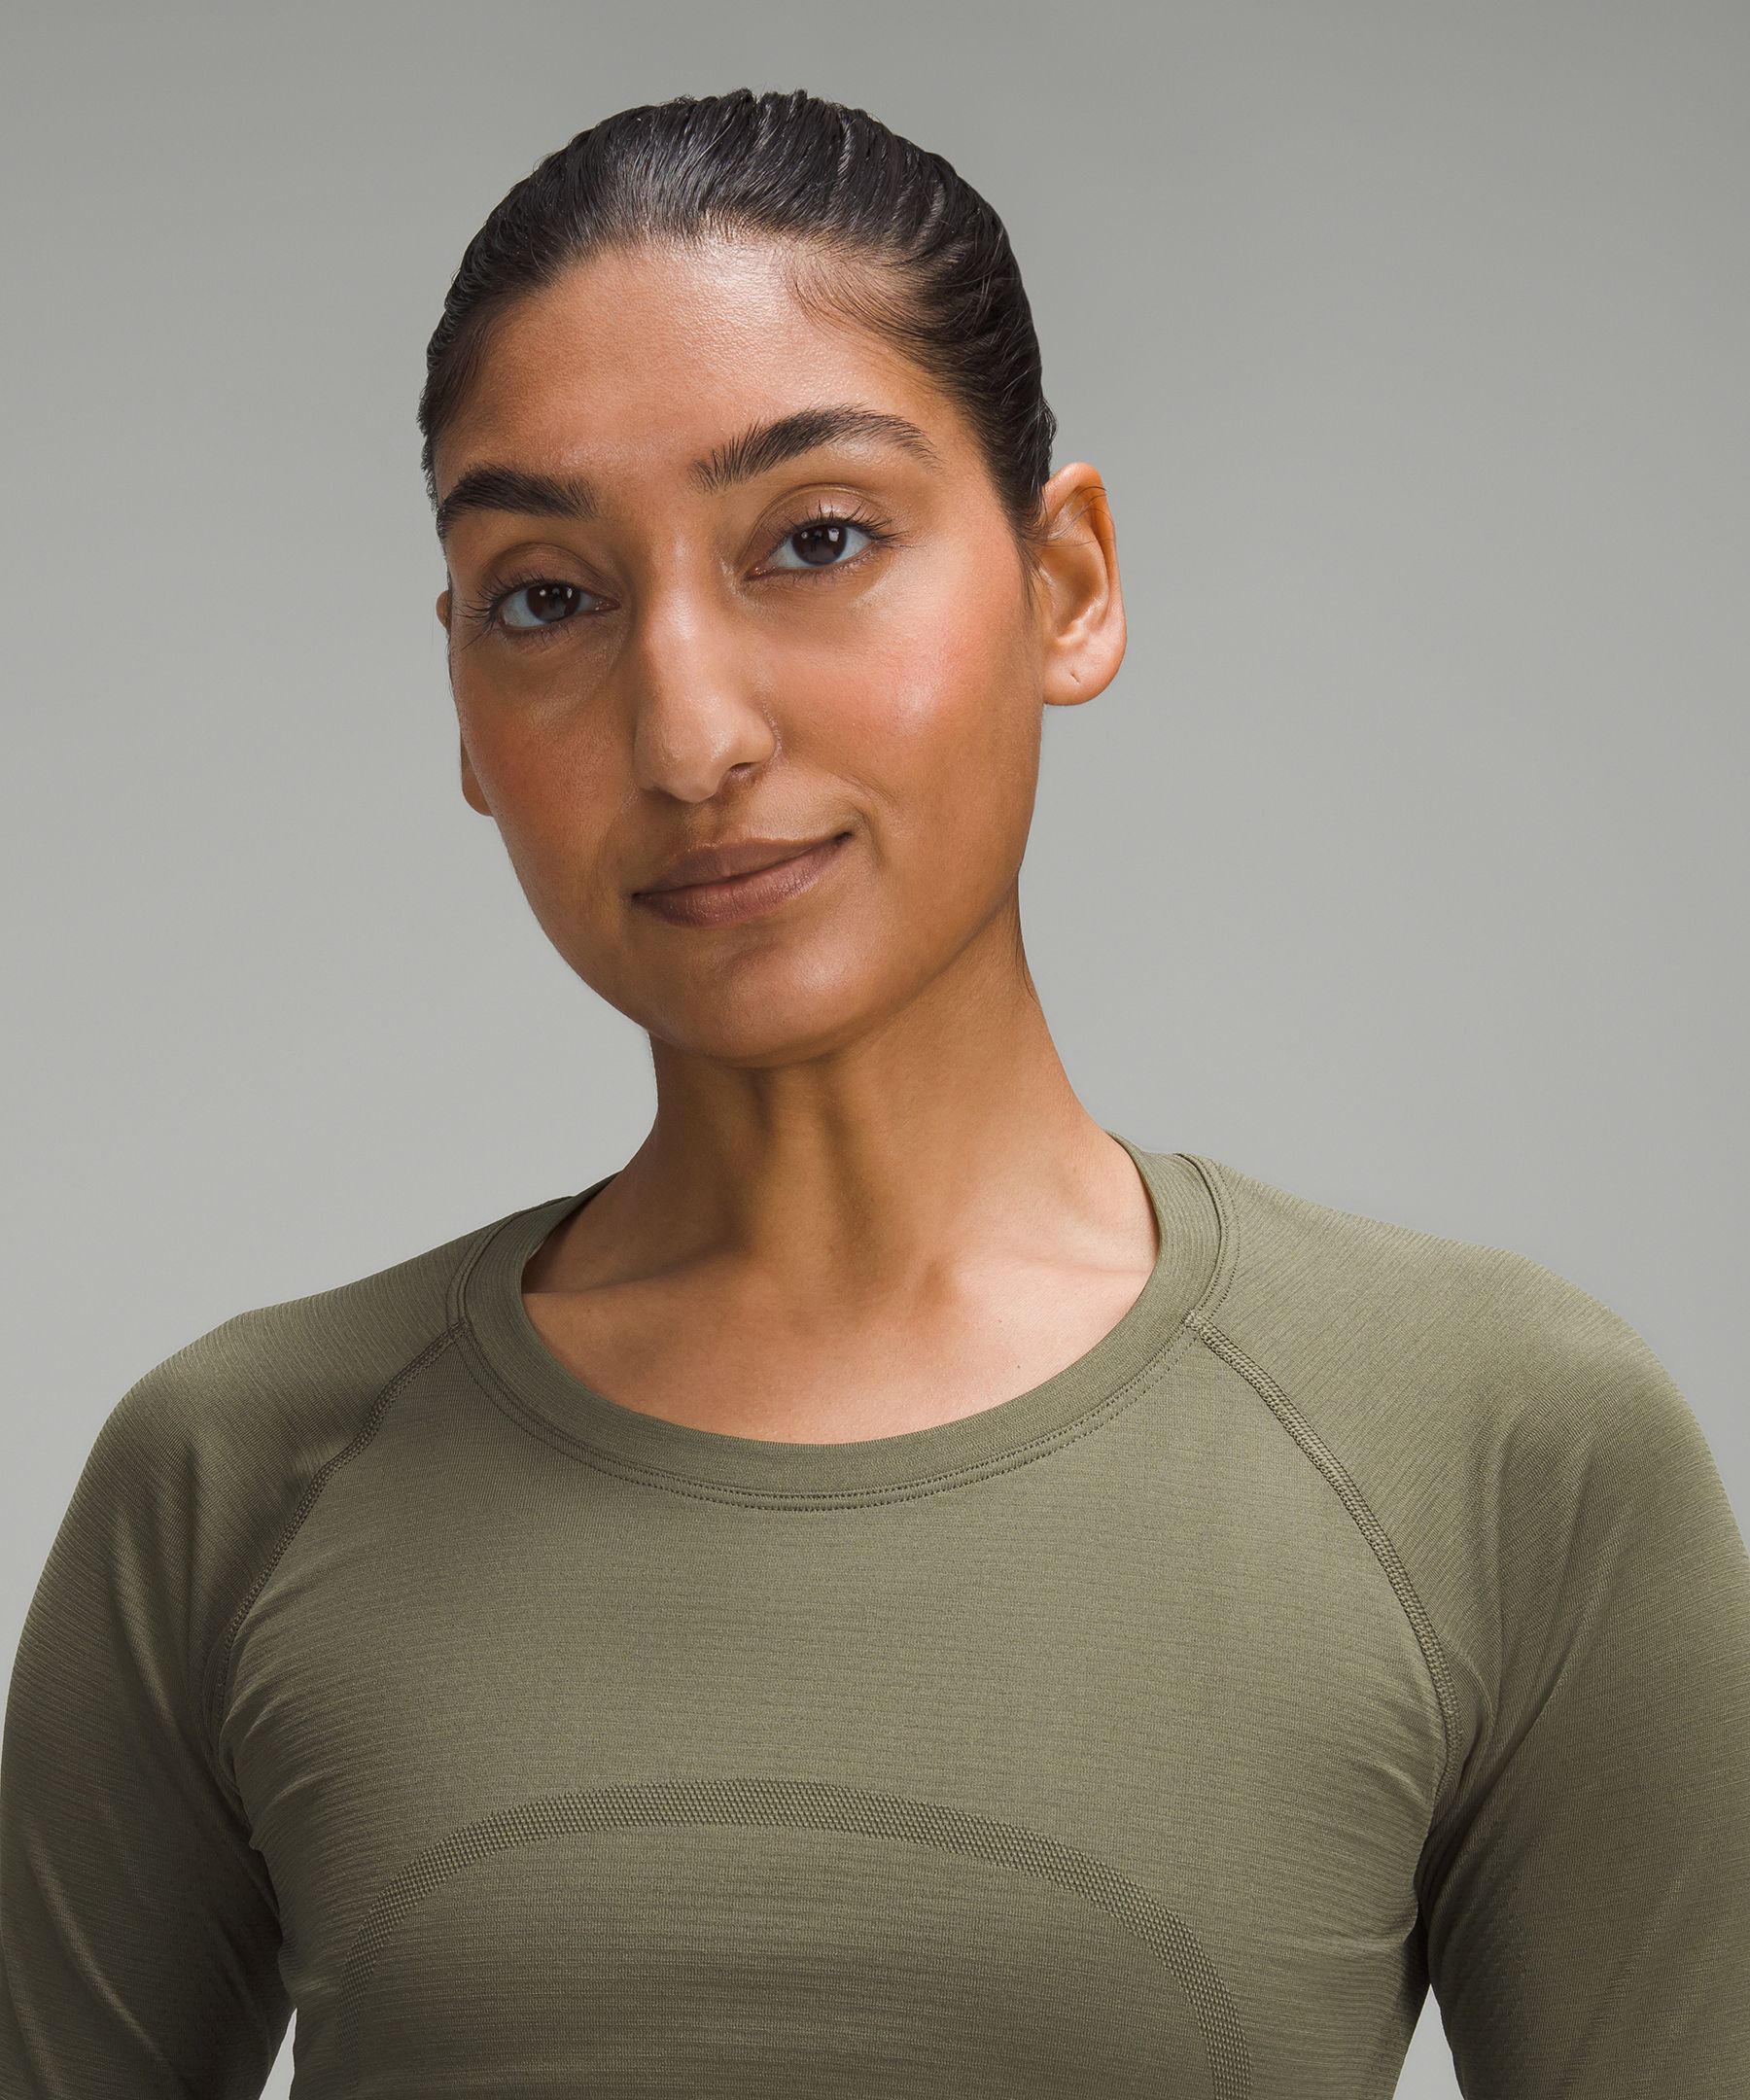 Lululemon athletica Swiftly Tech Cropped Long-Sleeve Shirt 2.0, Women's  Long Sleeve Shirts